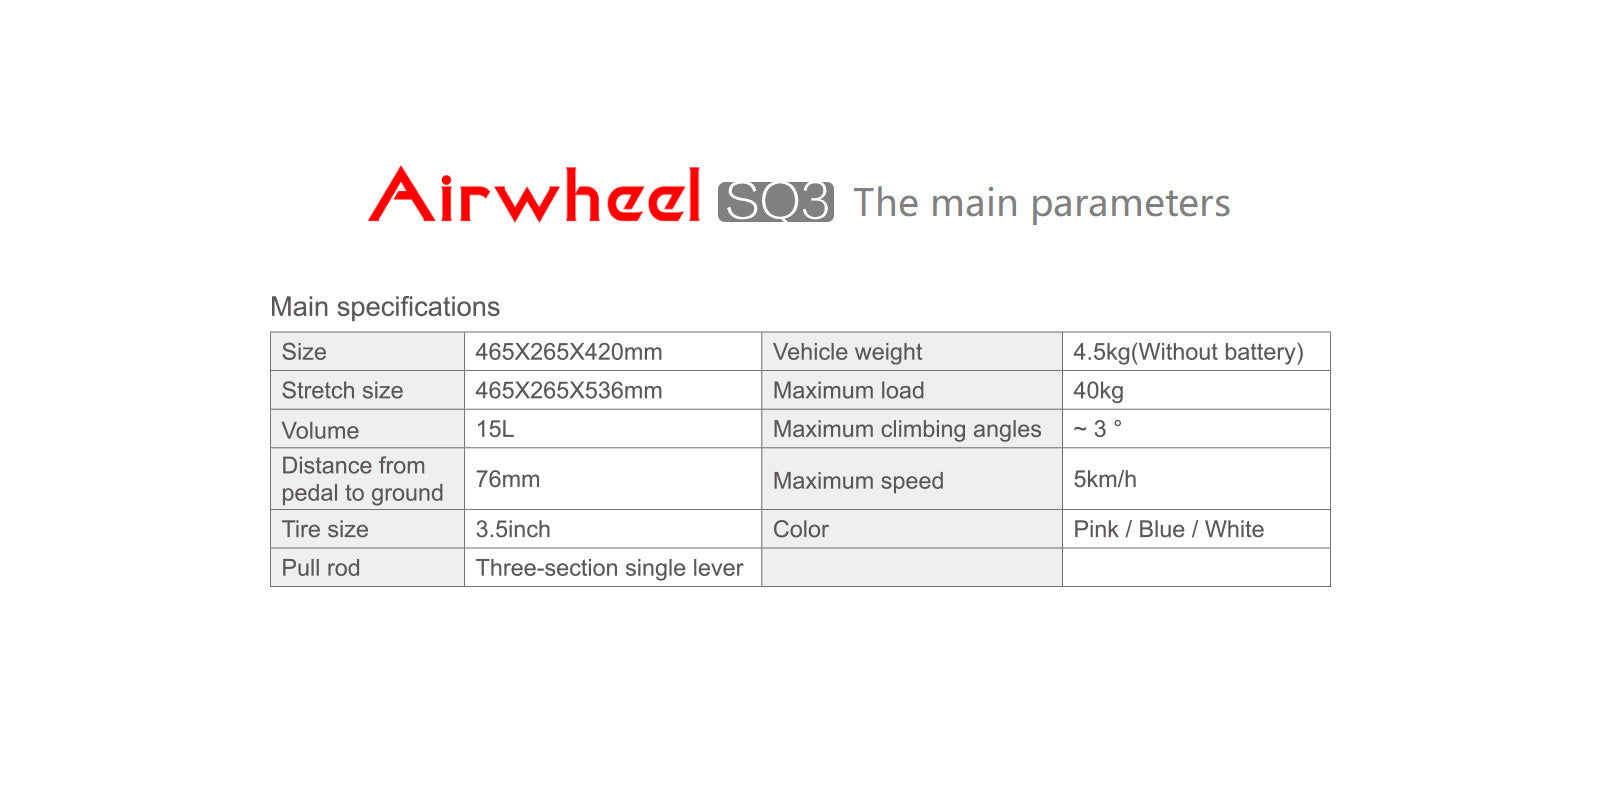 Airwheel-SQ3-Kids-Riding-Suitcase--Technical-Parameters-Desktop-019